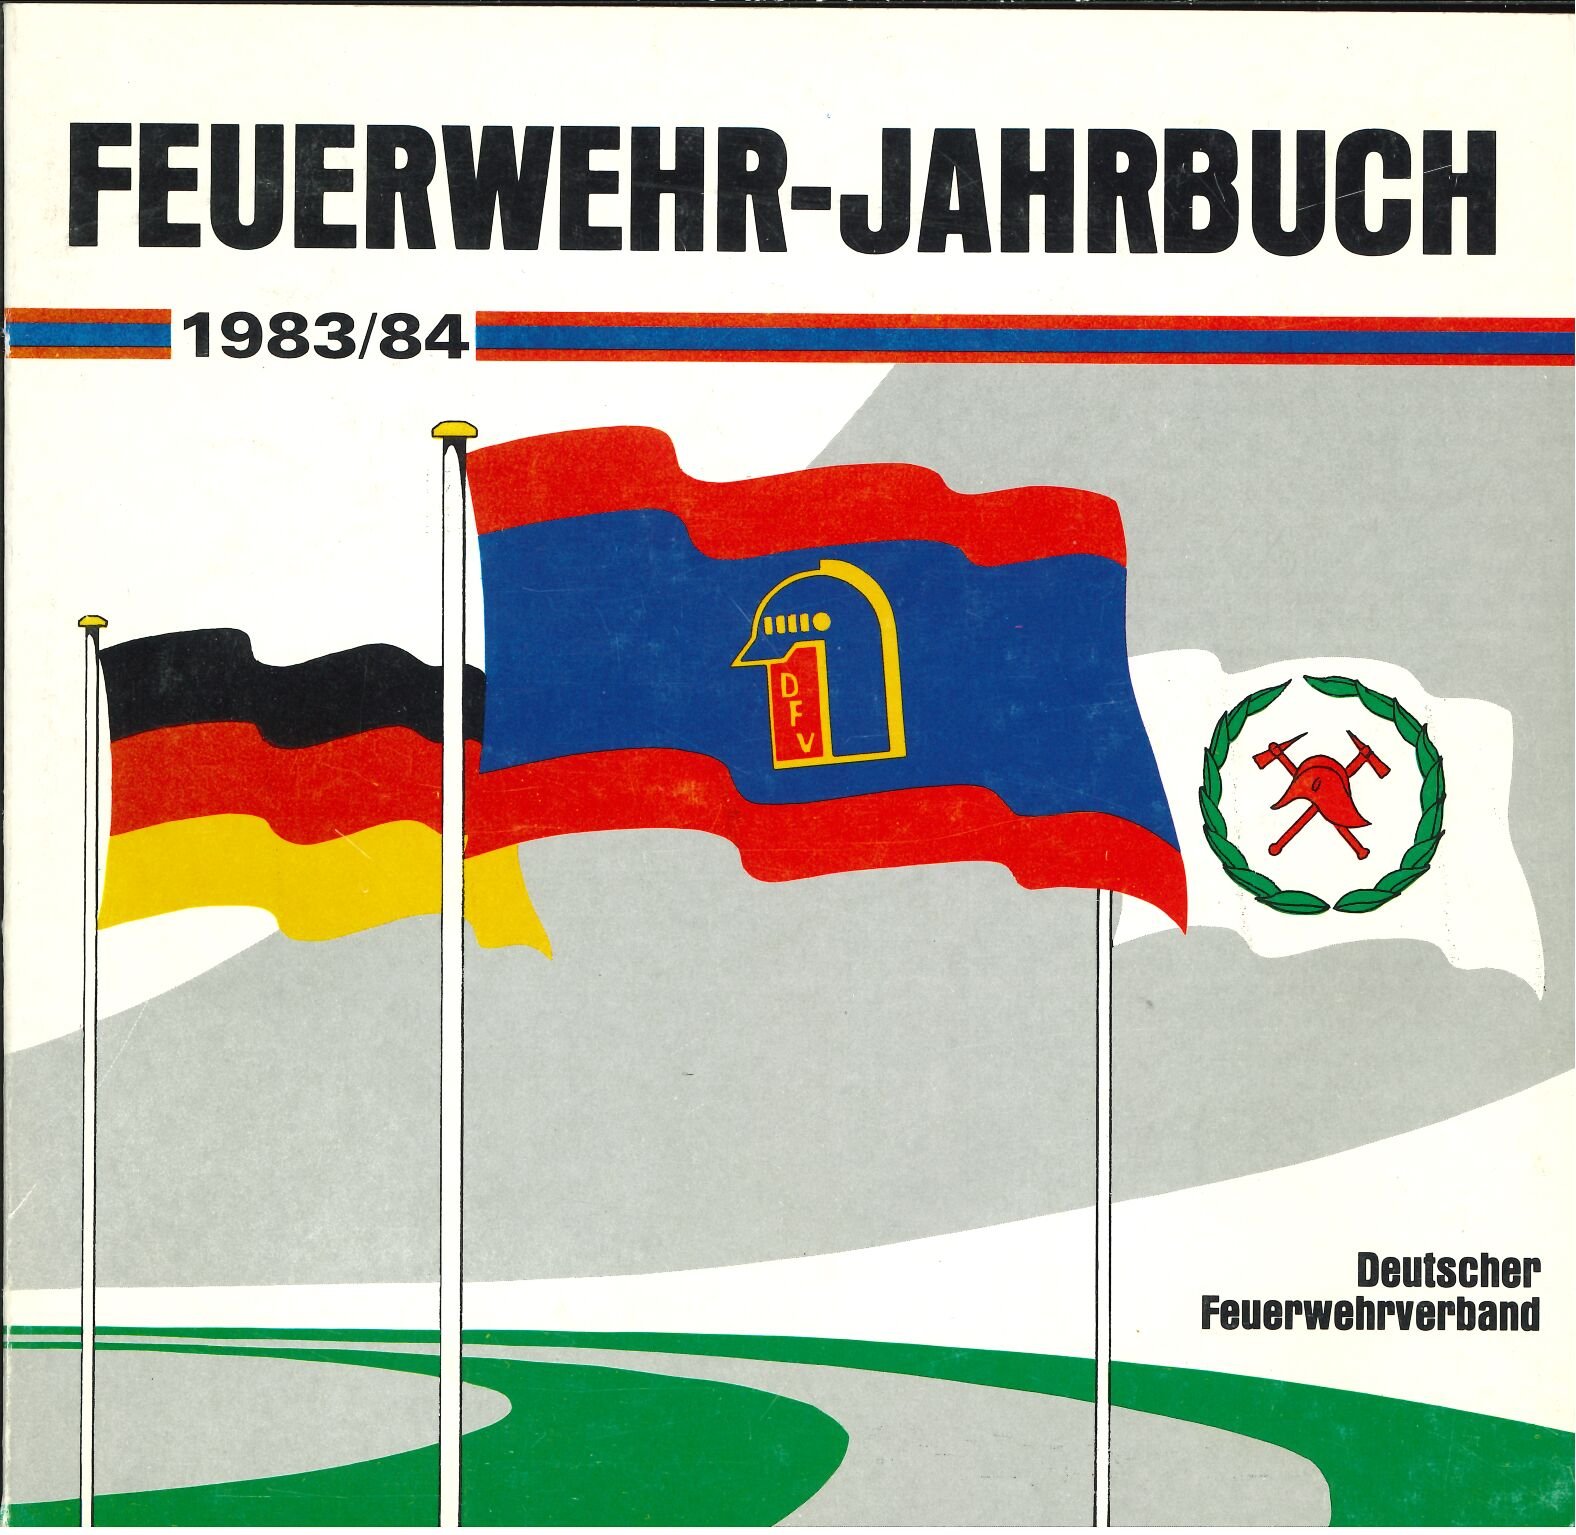 Feuerwehr-Jahrbuch 1983/84 (Feuerwehrmuseum Grethen CC BY-NC-SA)